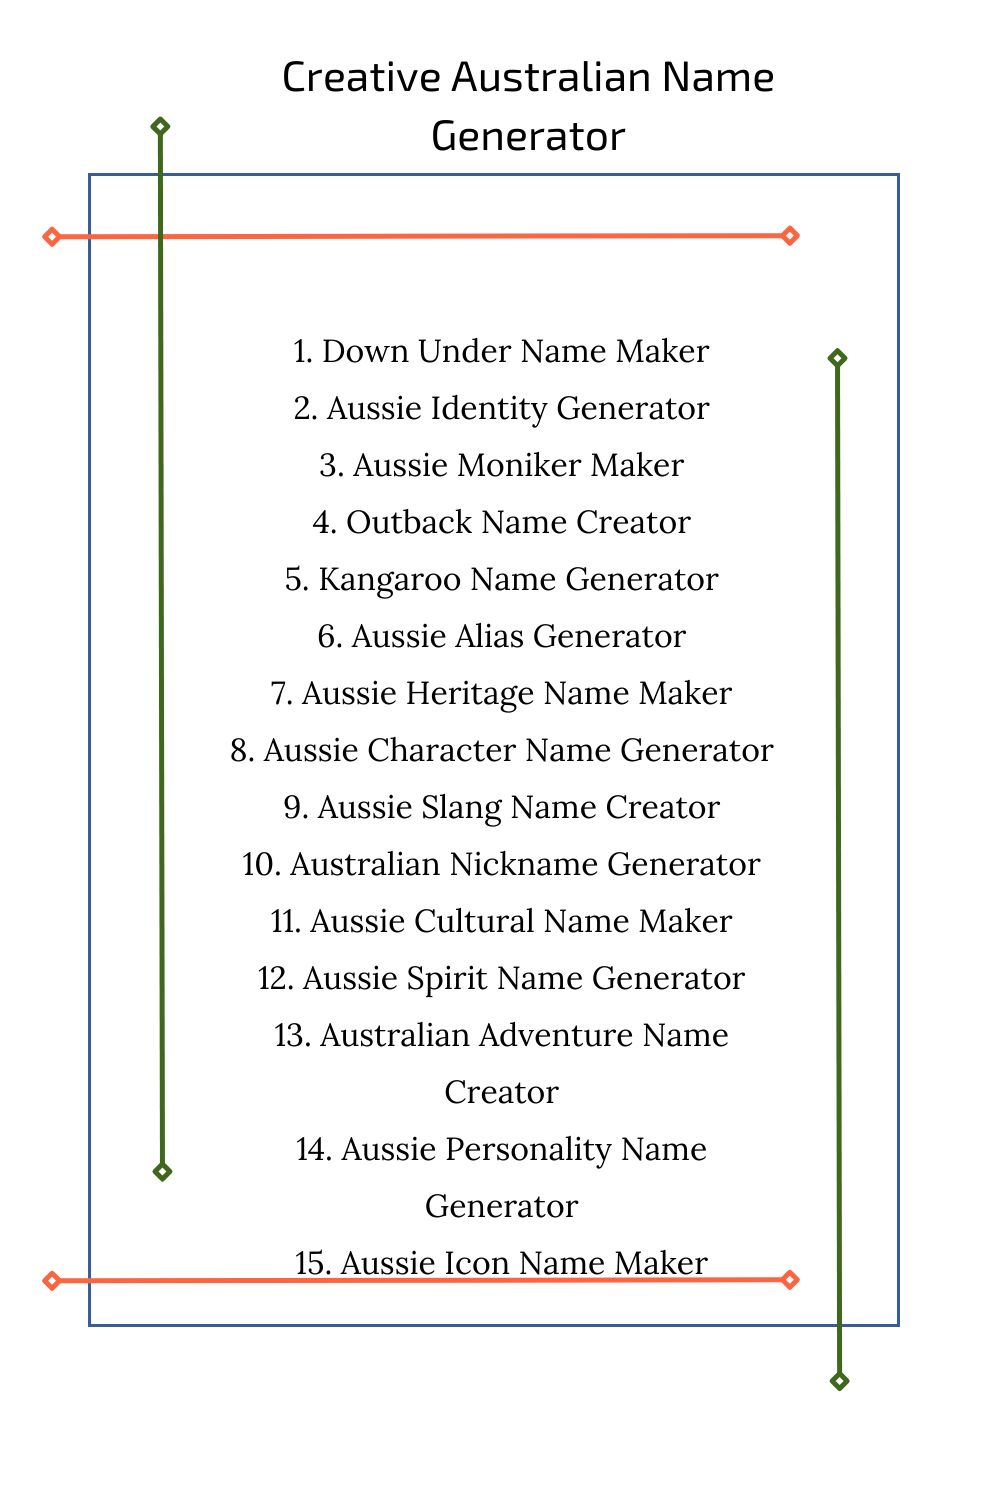 Creative Australian Name Generator